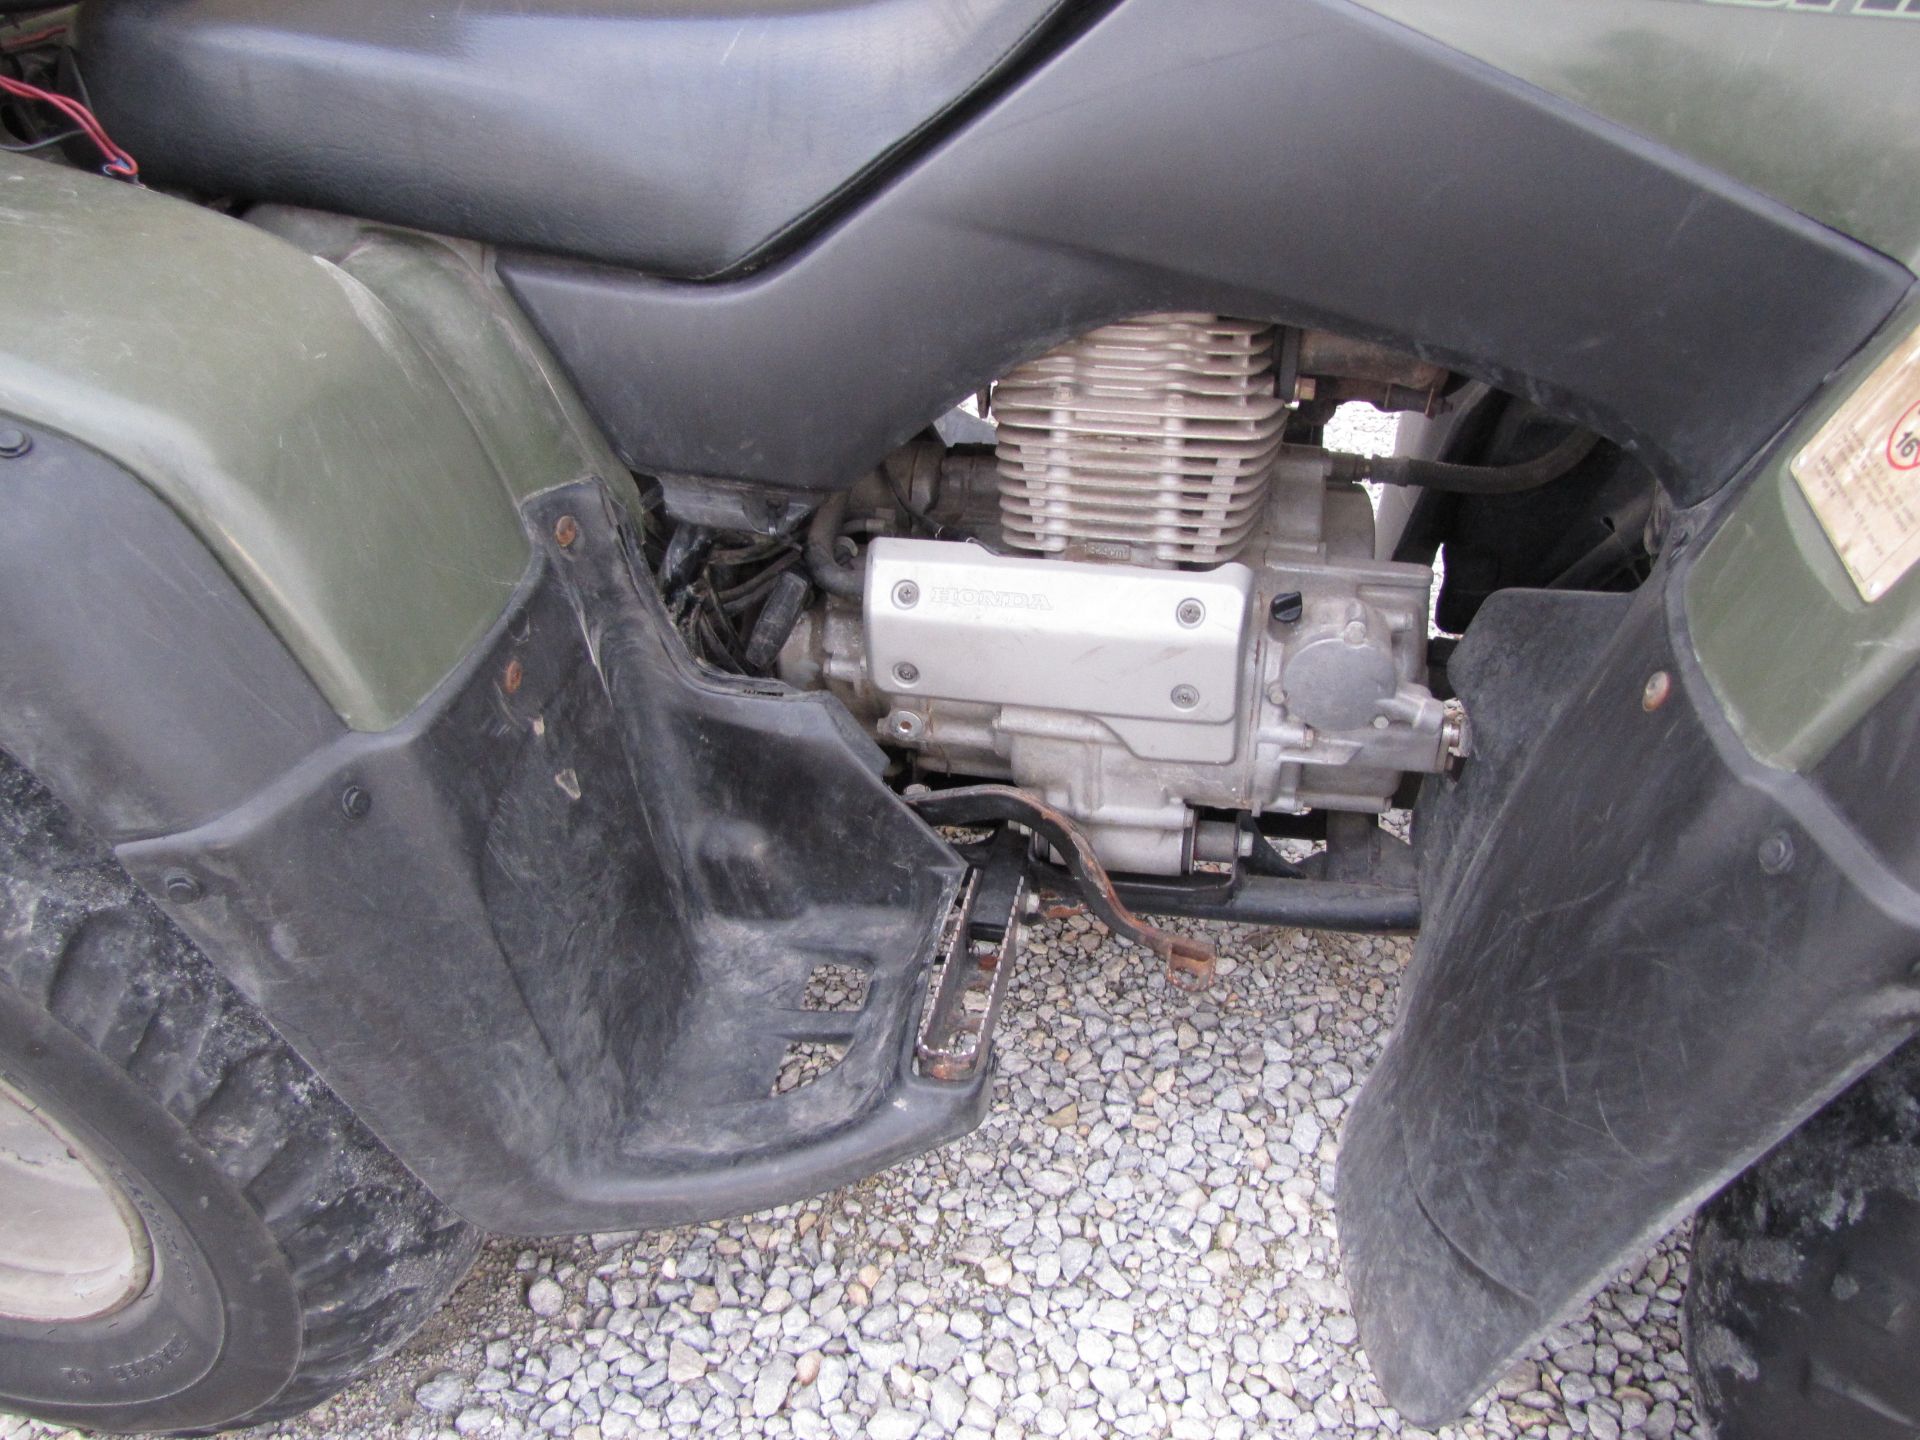 Honda Rancher ATV - Image 12 of 33